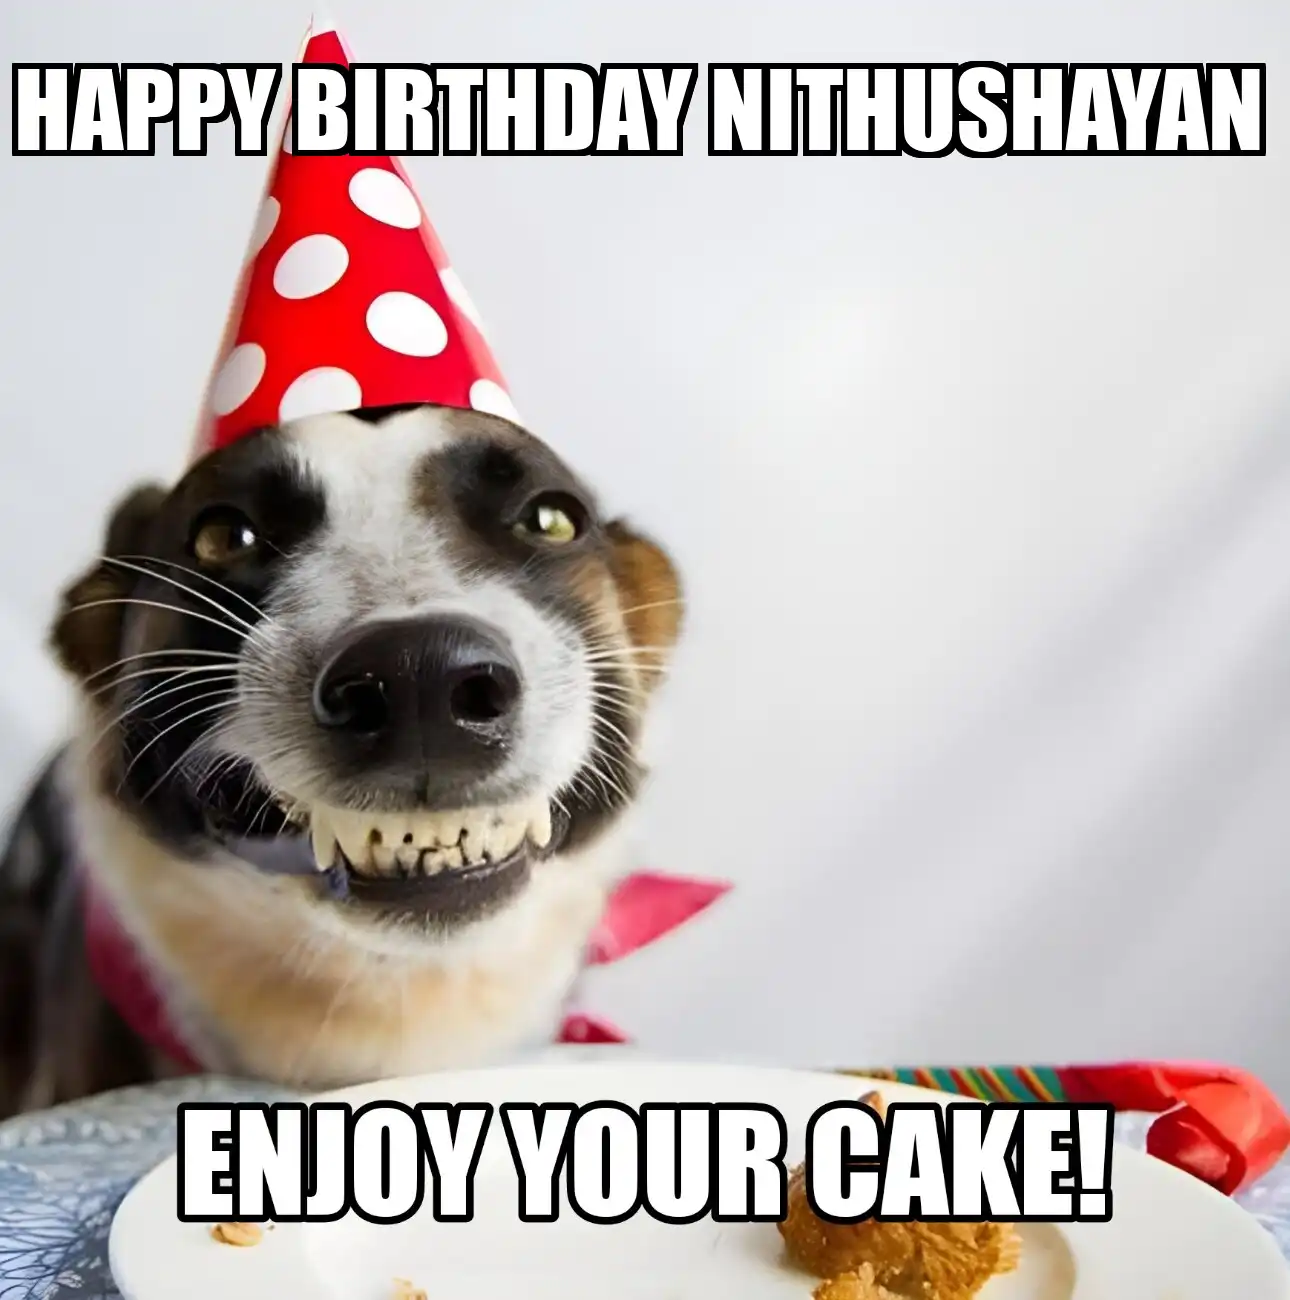 Happy Birthday Nithushayan Enjoy Your Cake Dog Meme